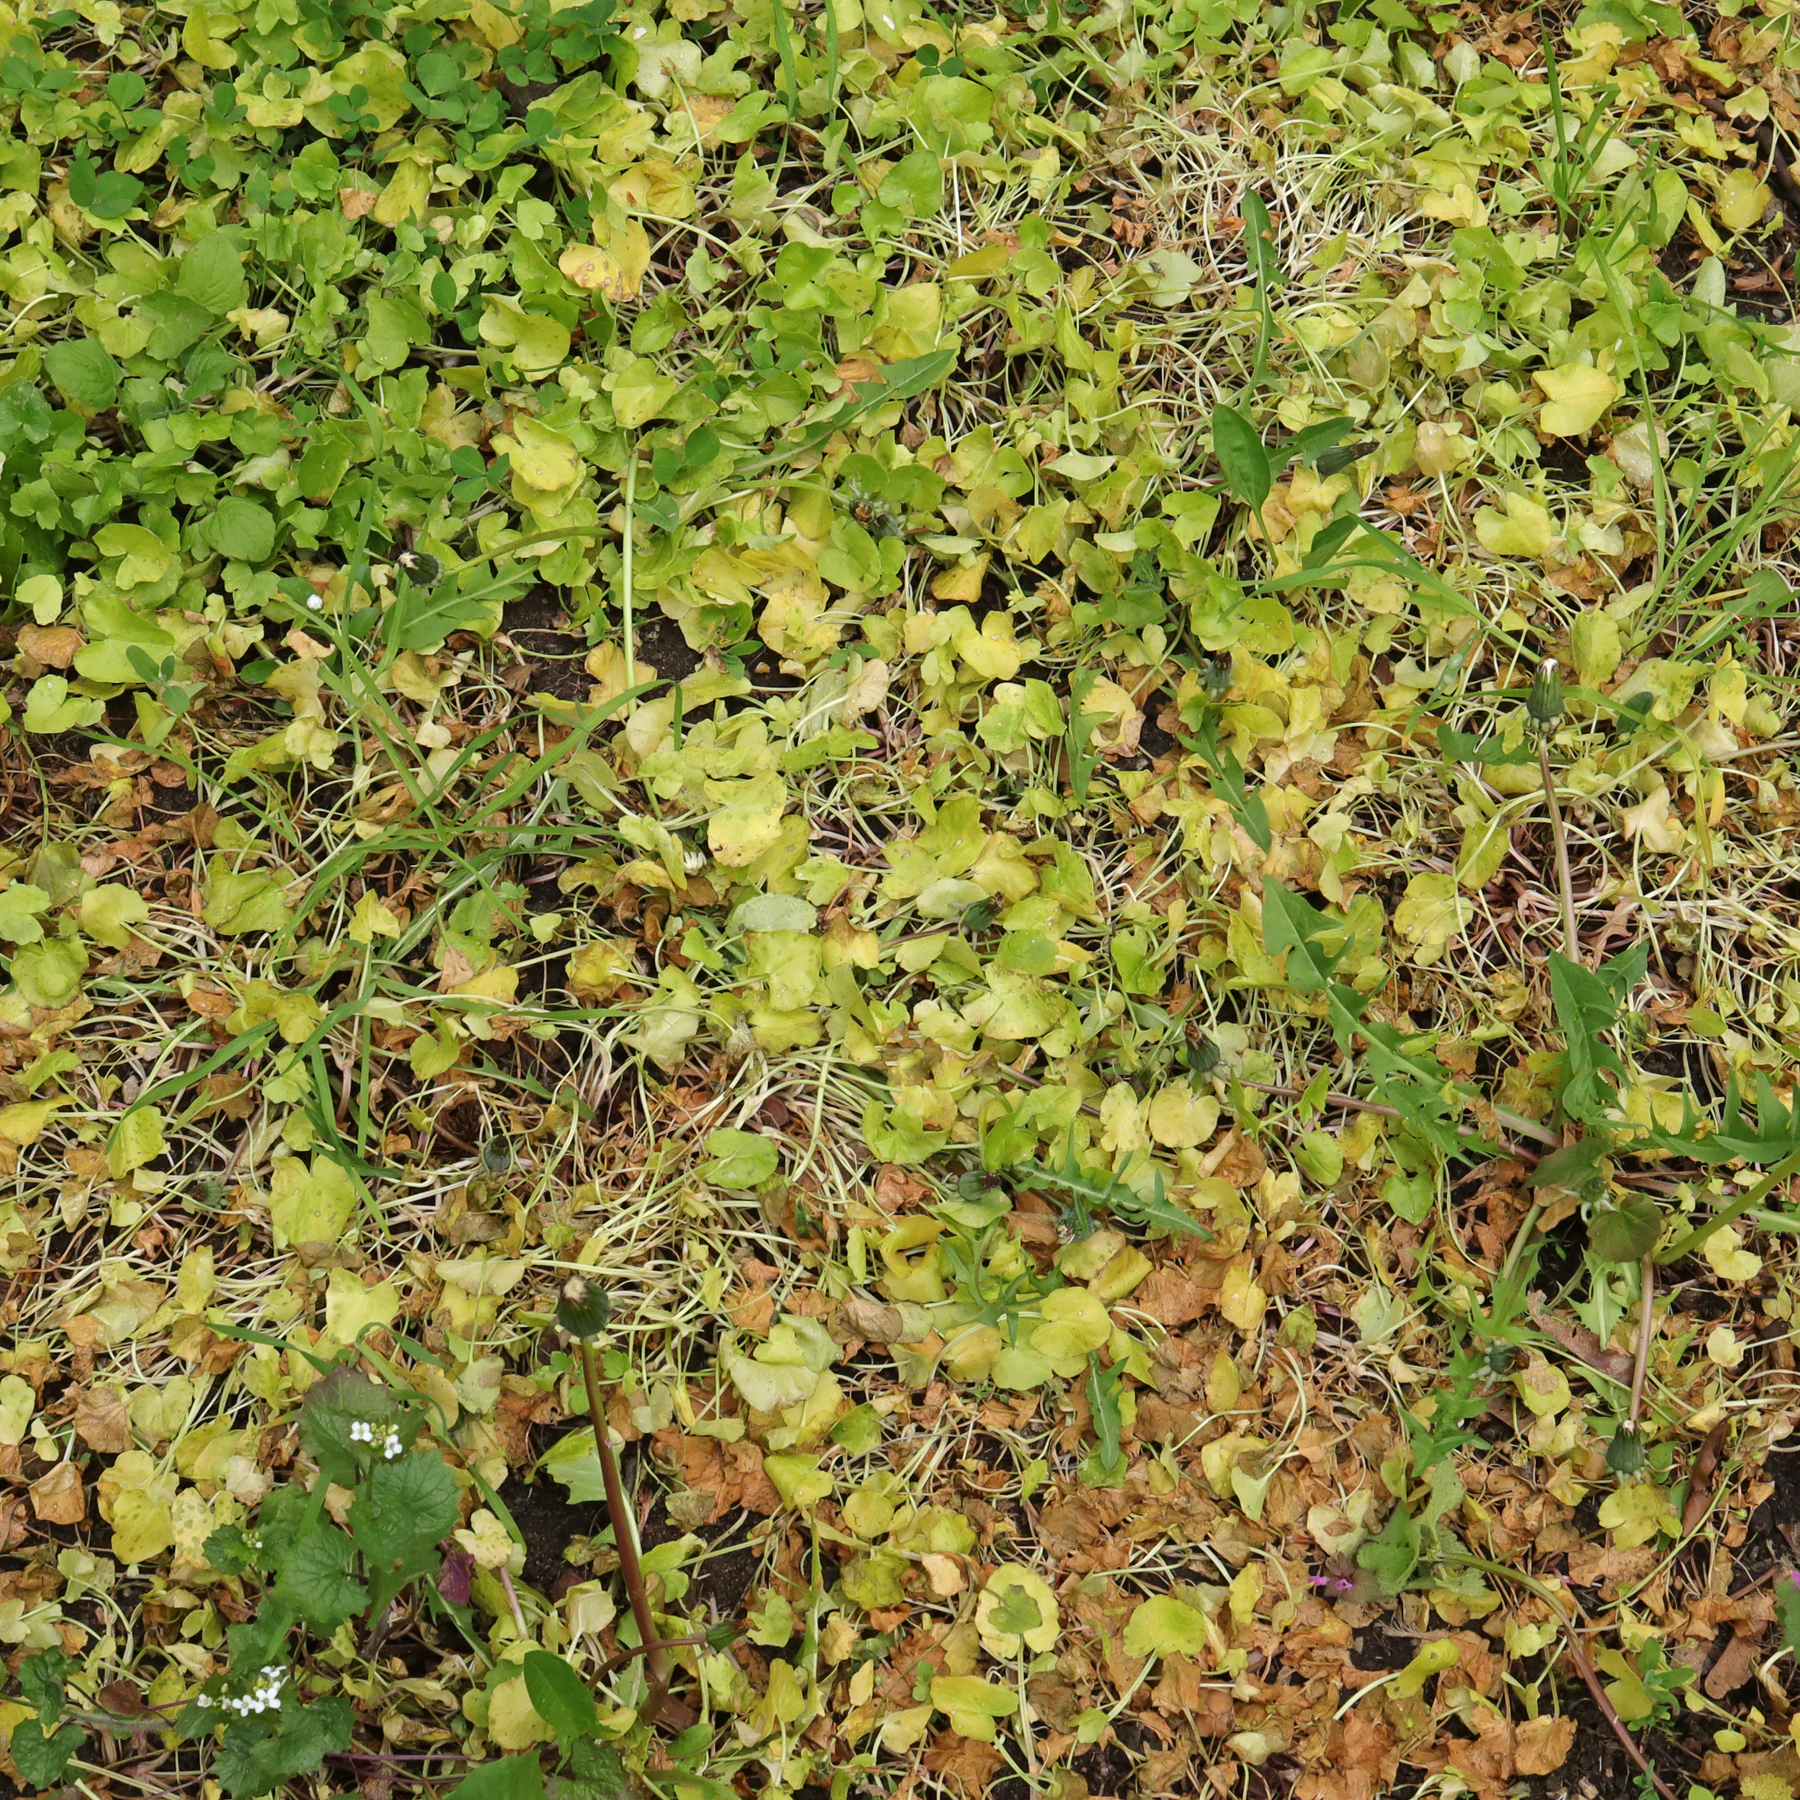 lesser celandine withered leaves